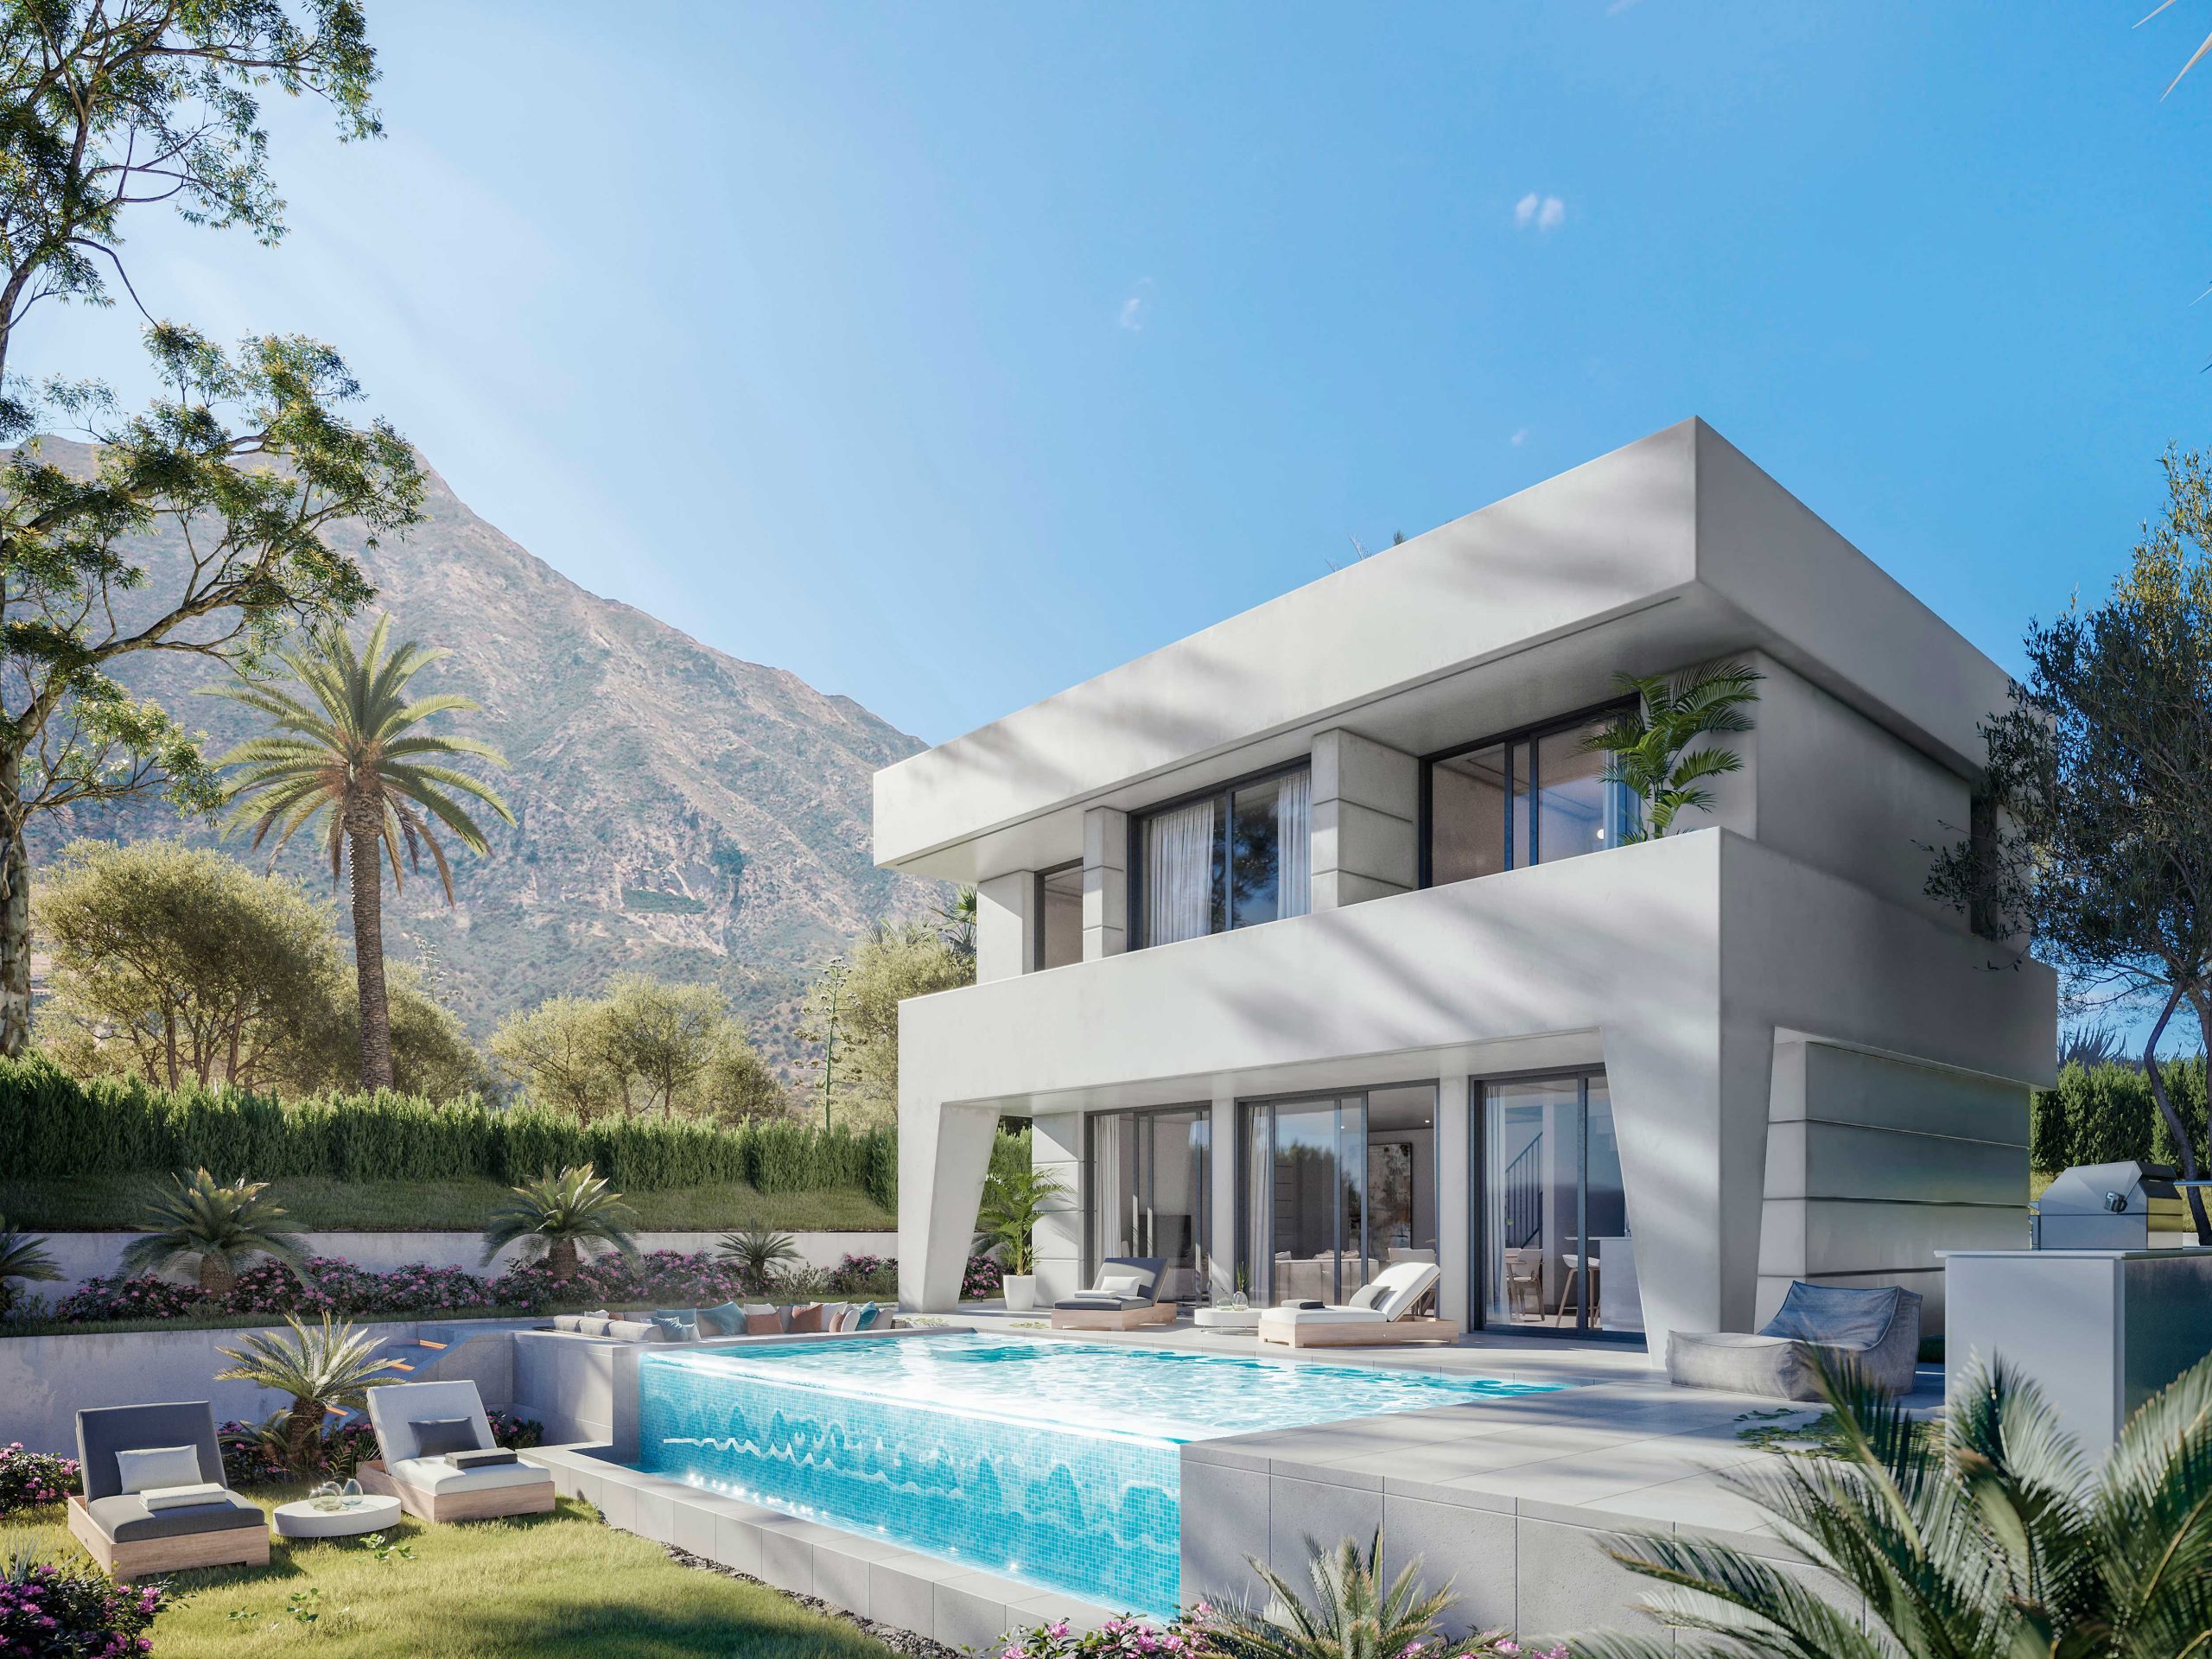 Villa with a fresh design